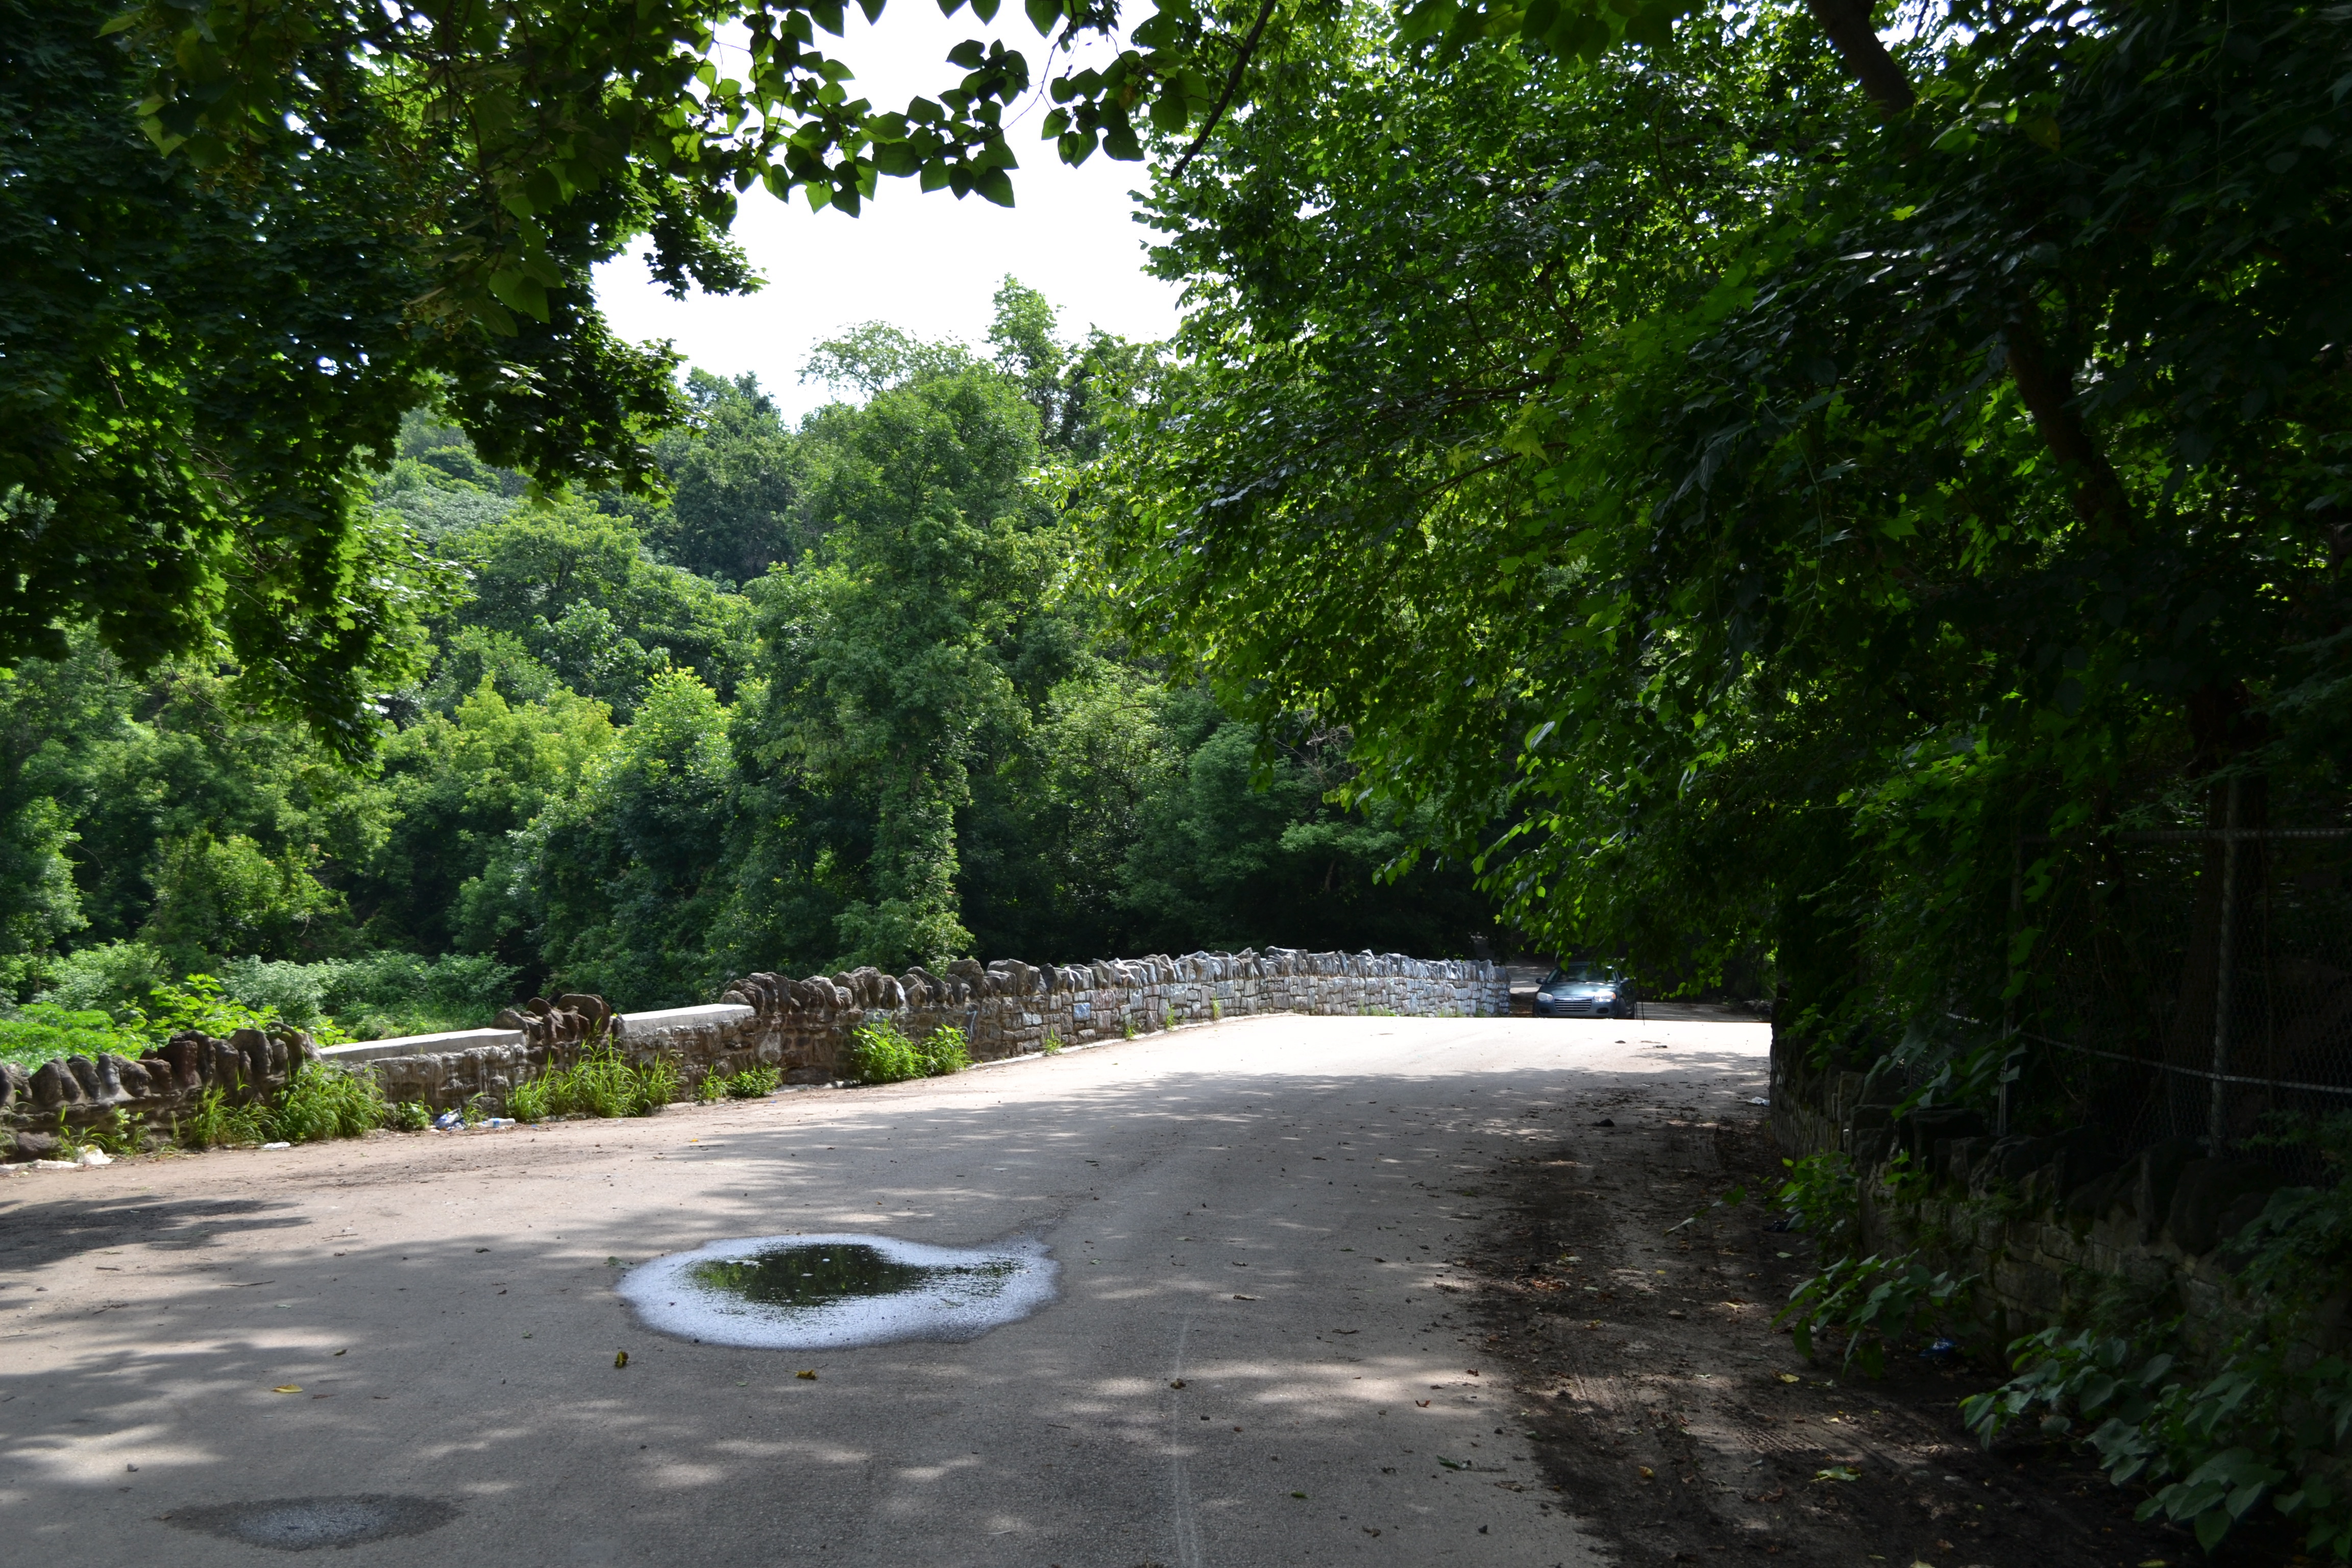 Tacony Creek Park, The trail crosses Fisher's Lane Bridge, one of the oldest bridges in Philadelphia County